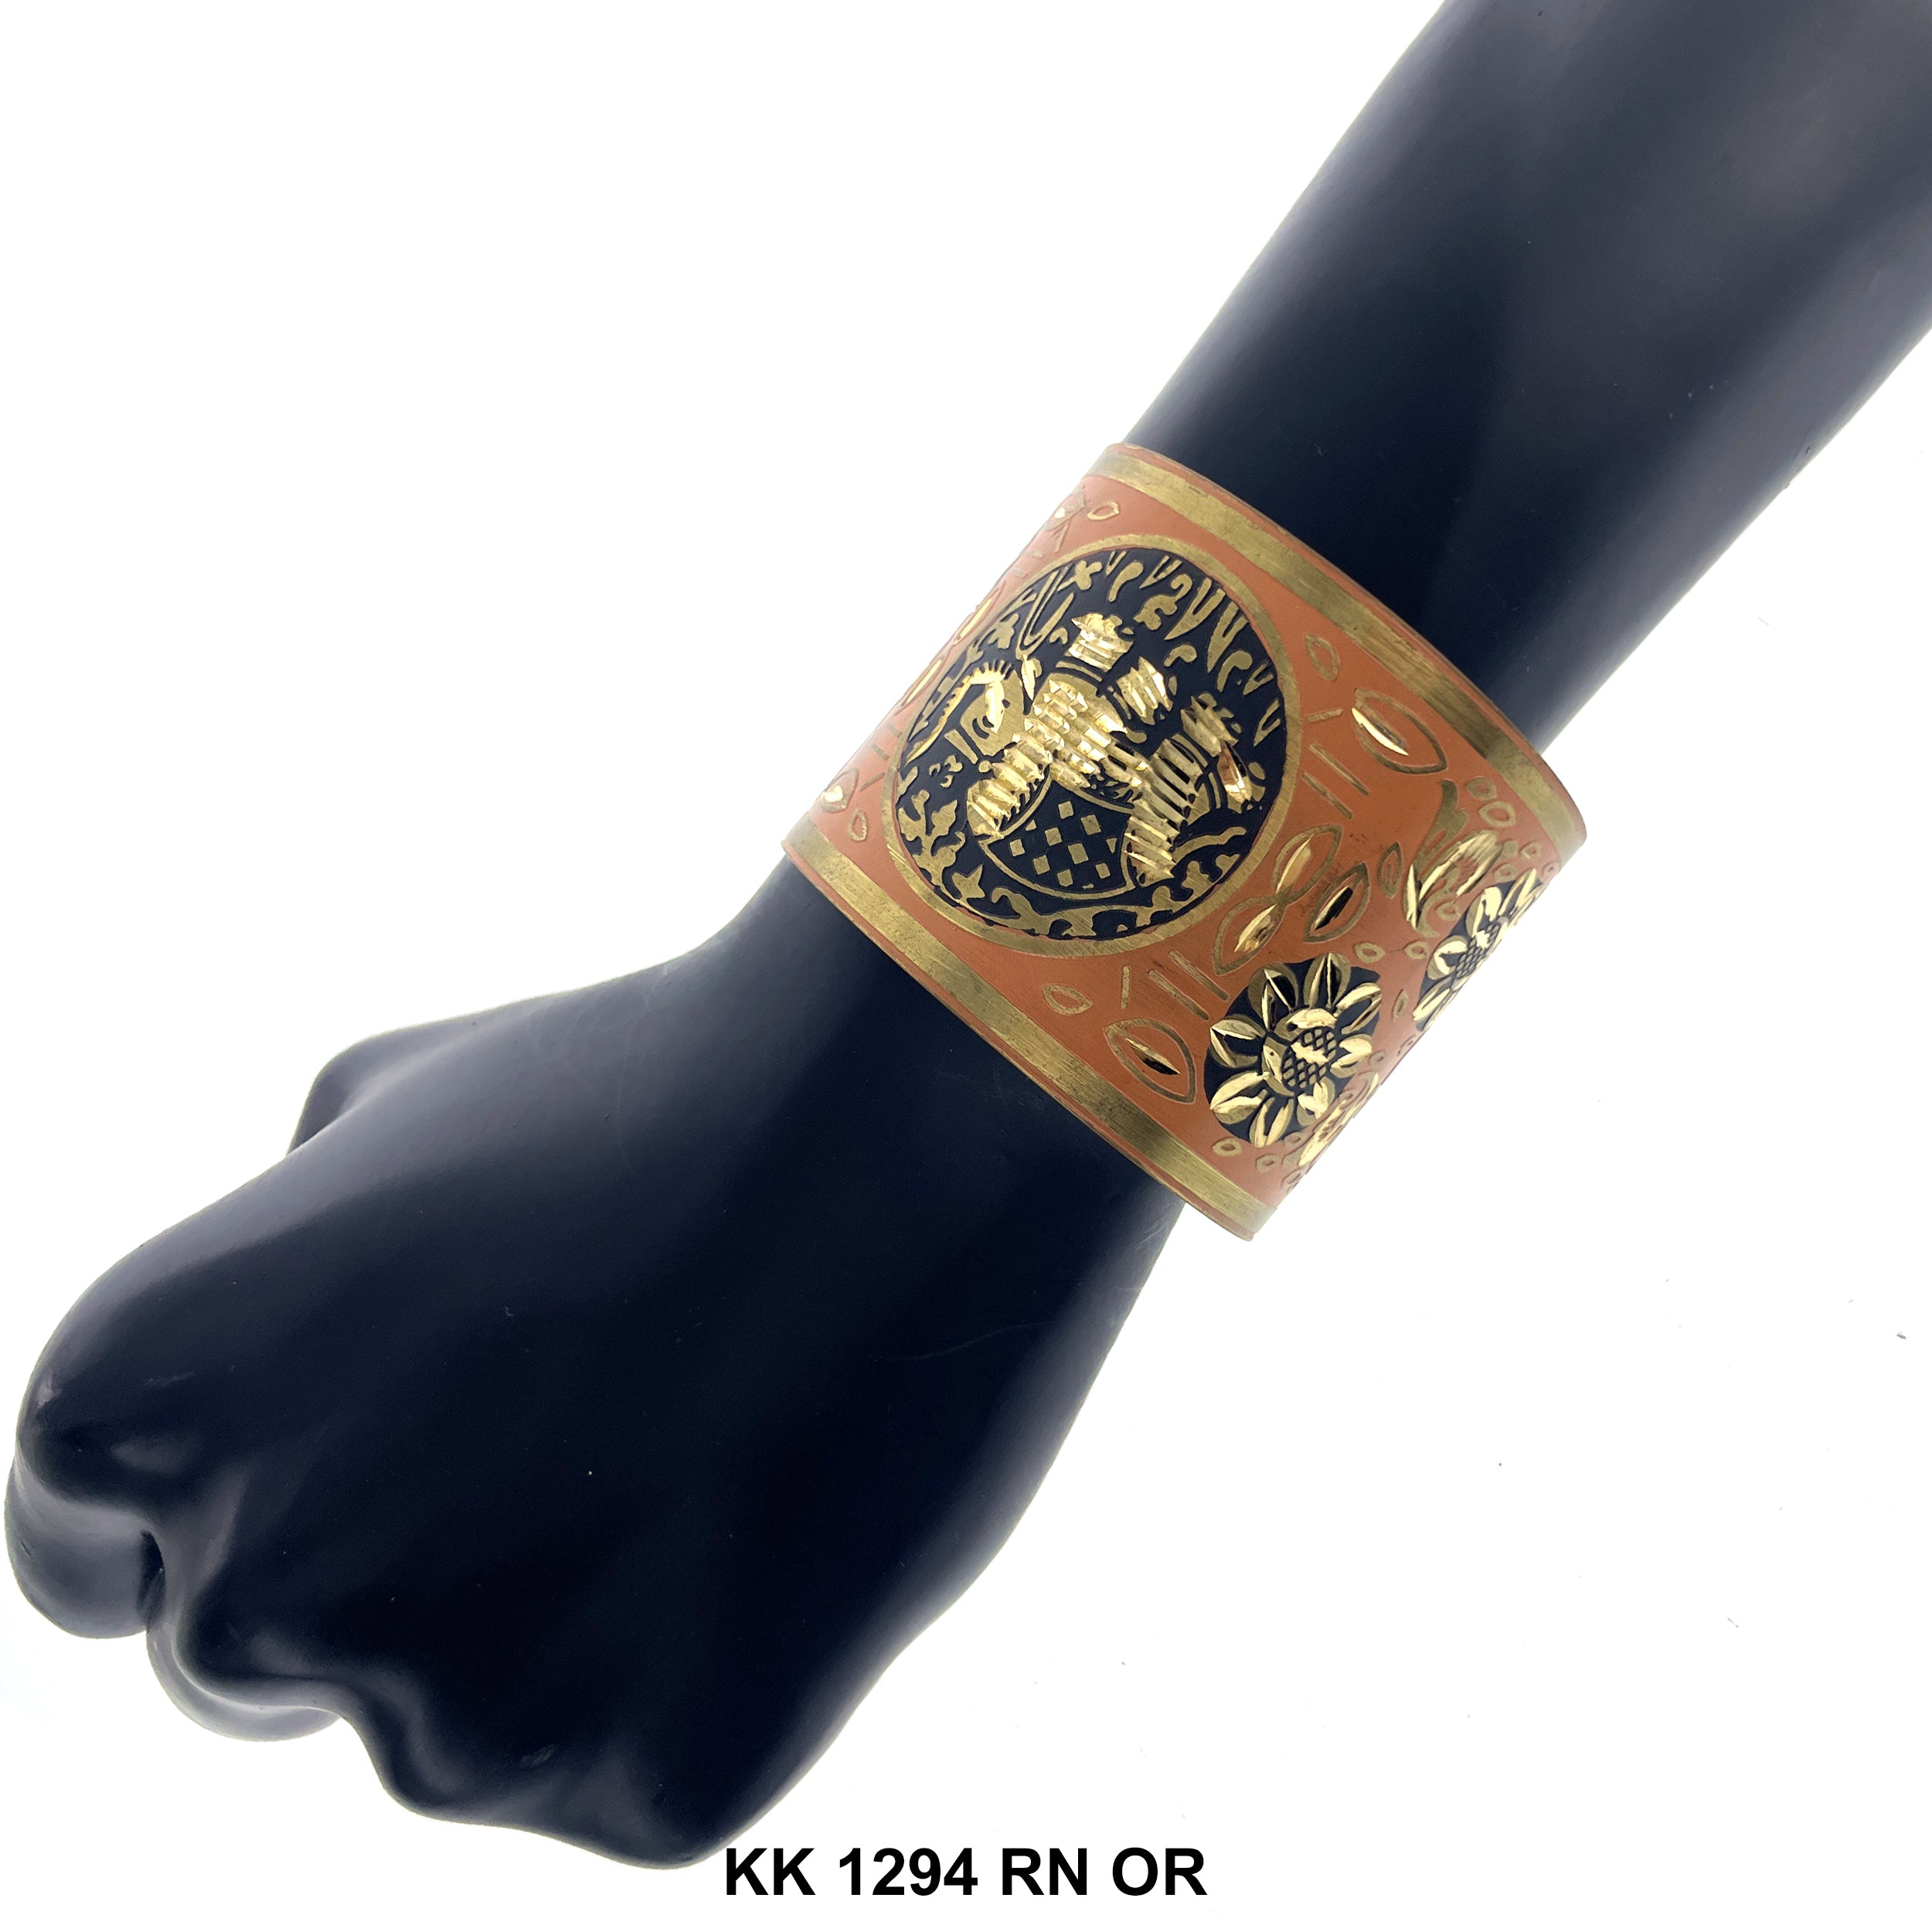 Hand Engraved Cuff Bangle Bracelet KK 1294 RN OR